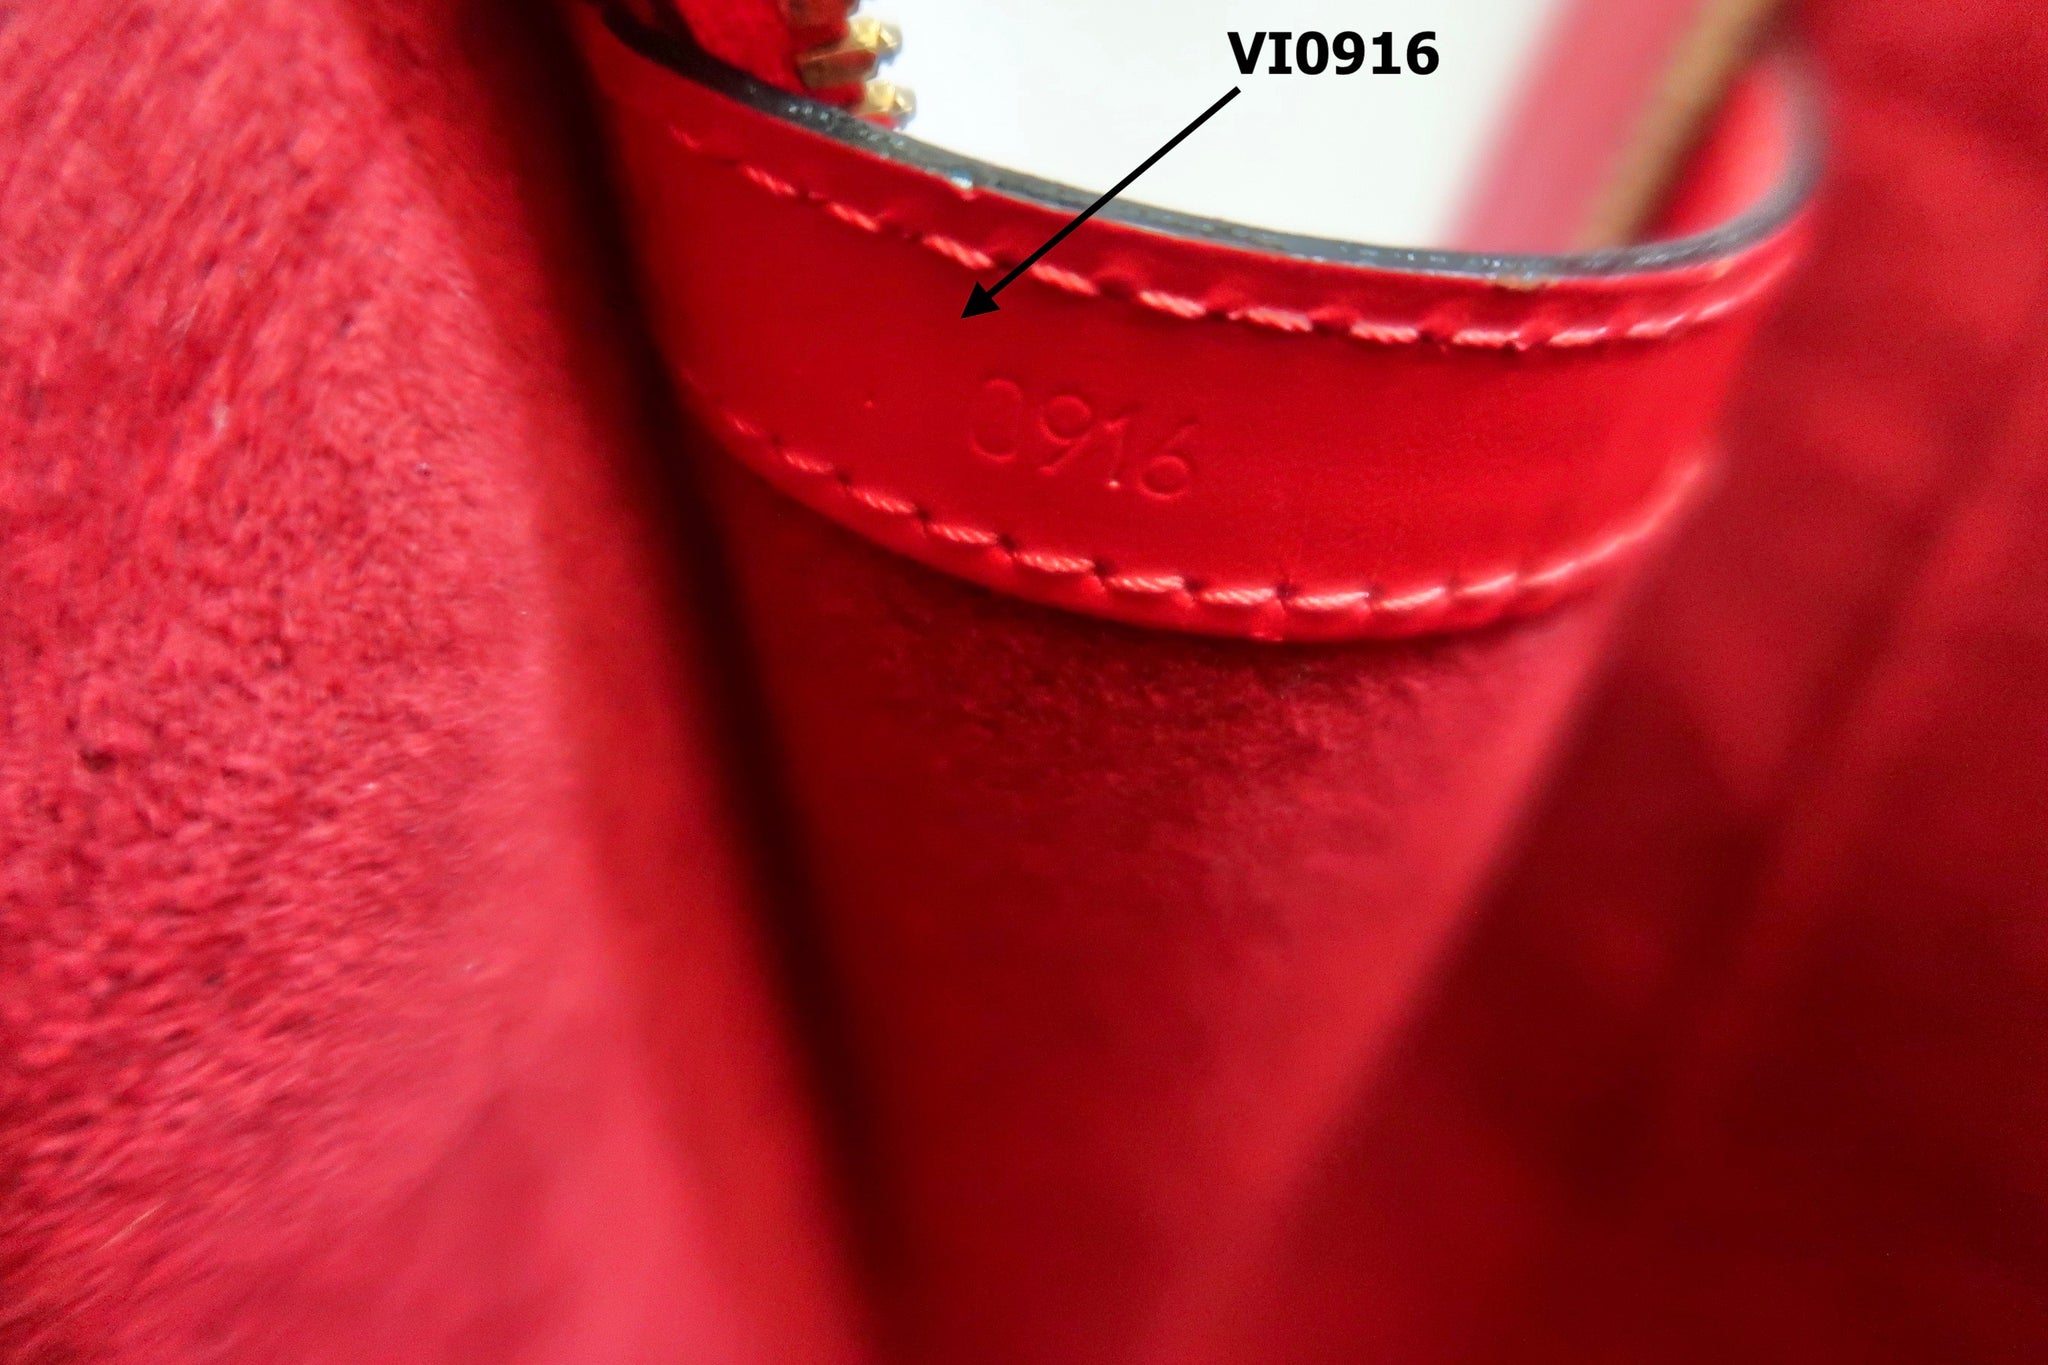 LOUIS VUITTON Louis Vuitton Lussac Tote Bag Epi Leather Red VI0975 Women's